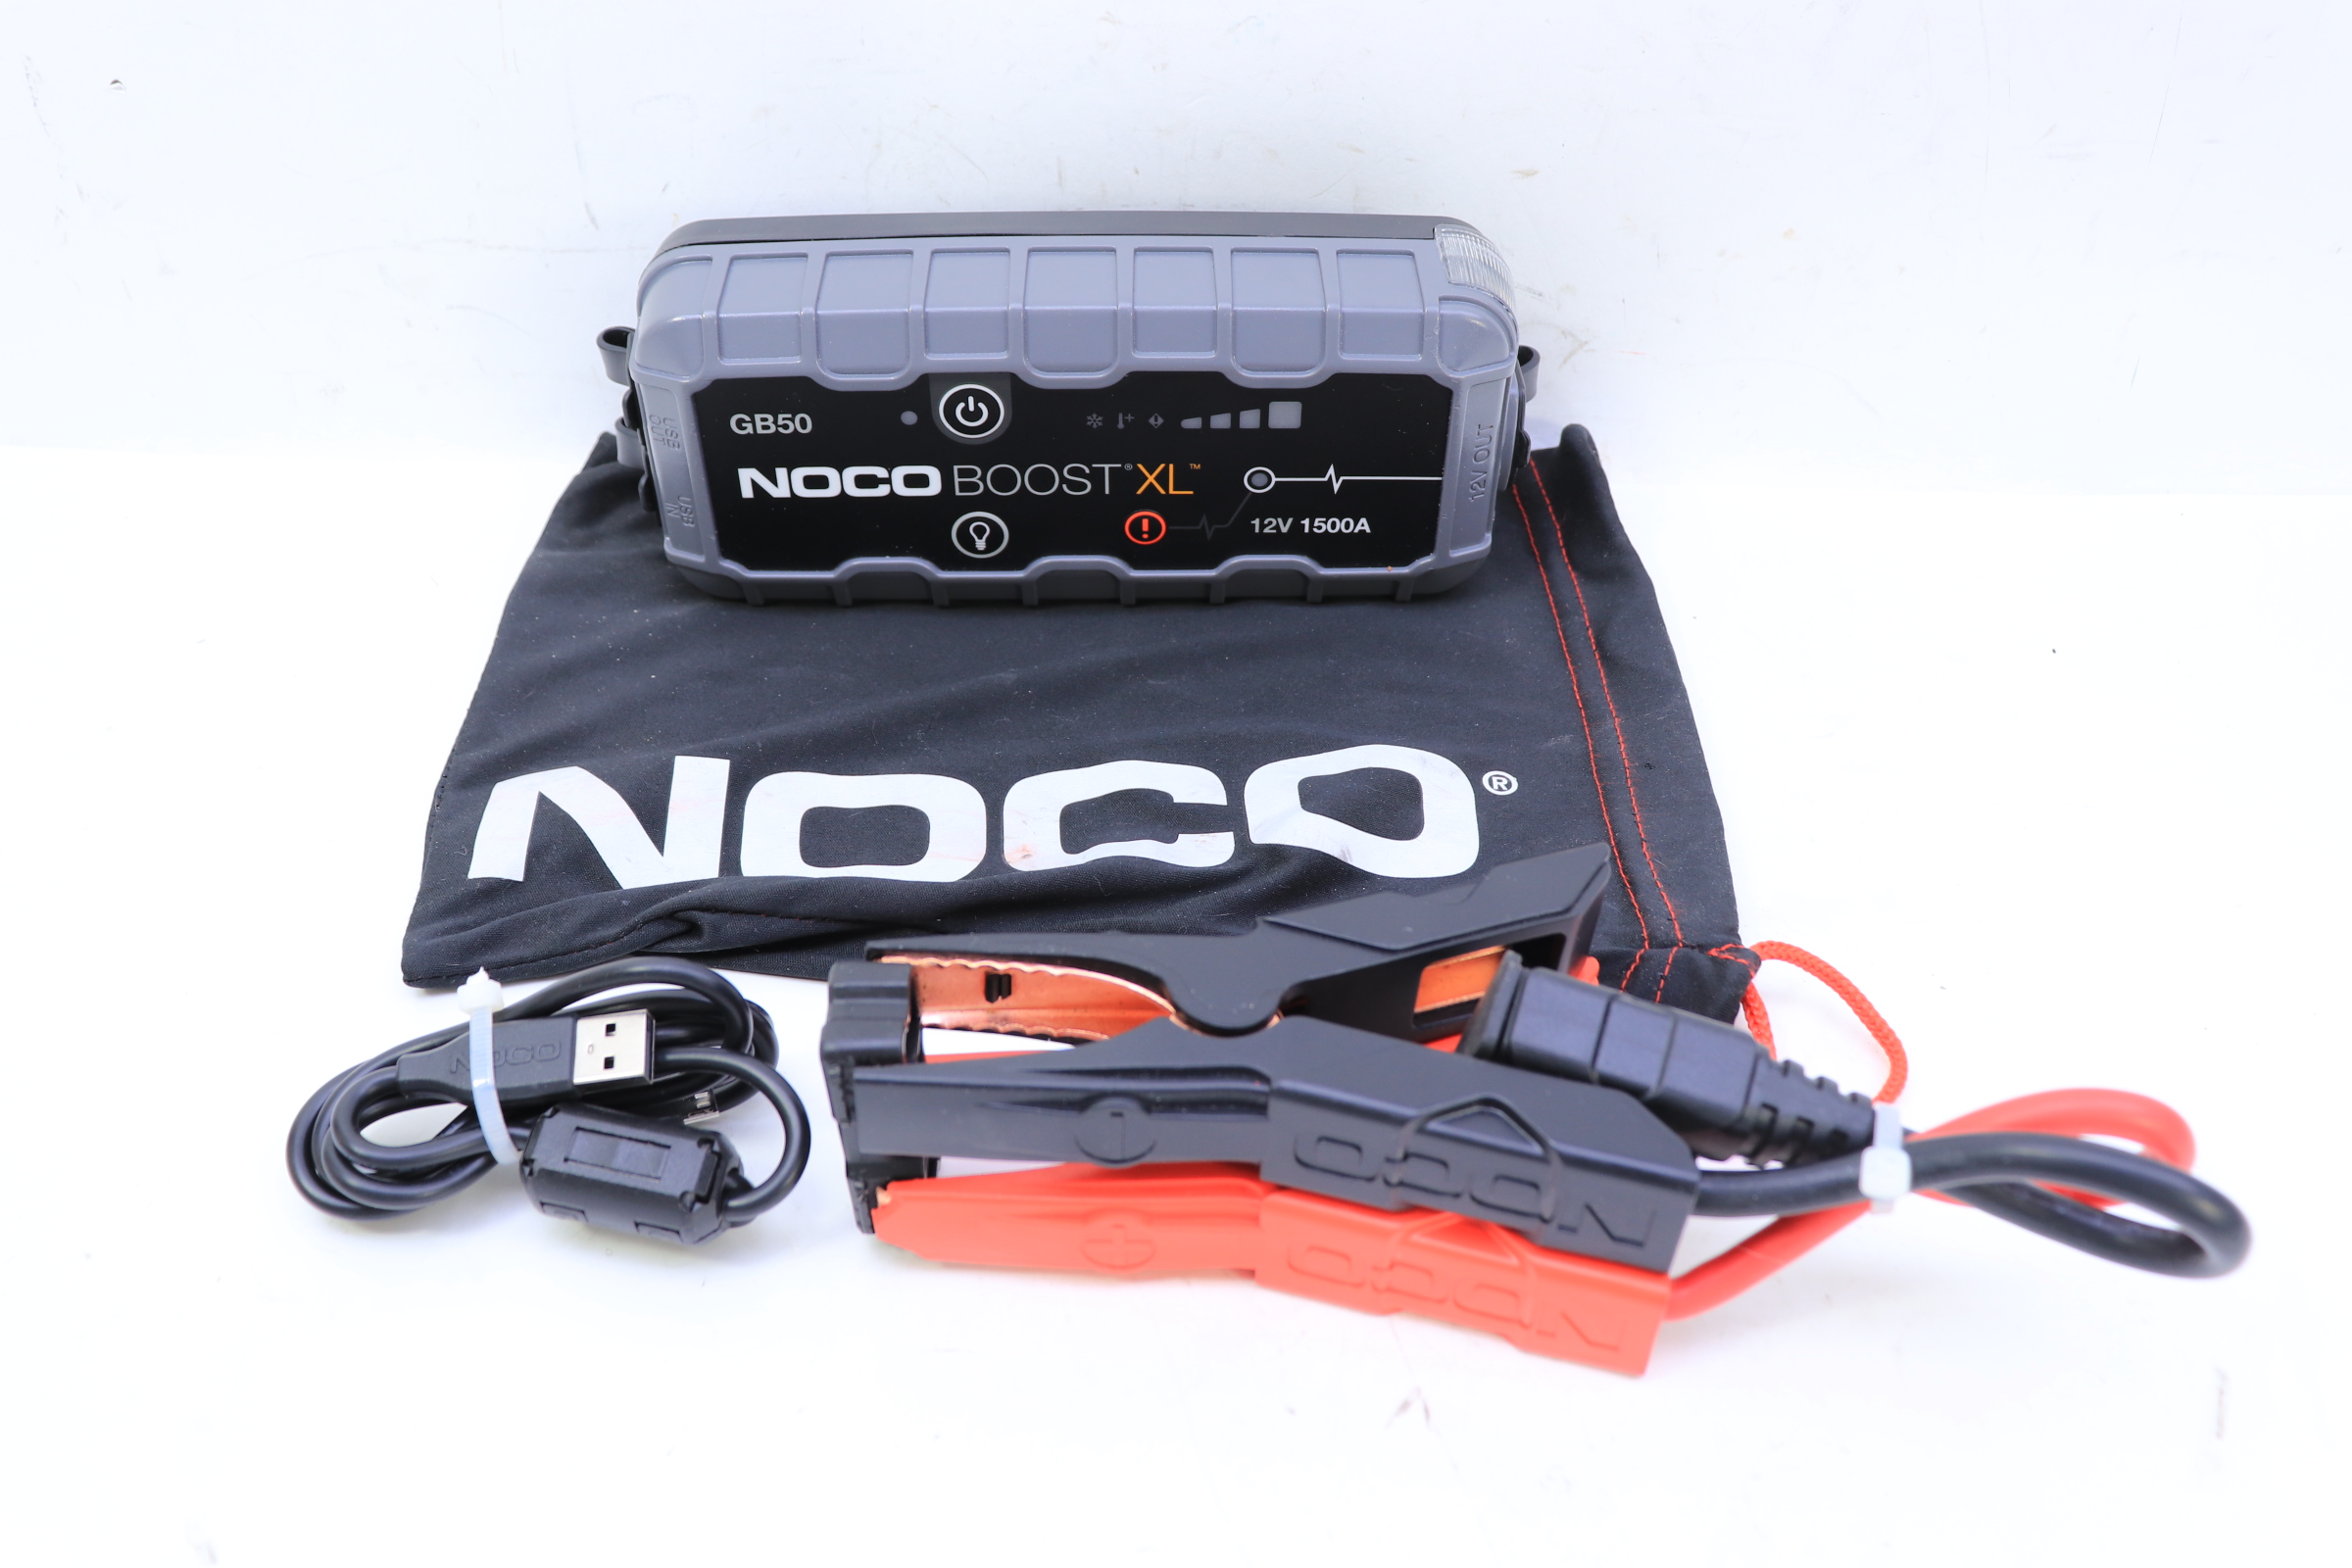 NOCO GB50 BOOST XL 12V 1500A UltraSafe Lithium Ion Portable Jump